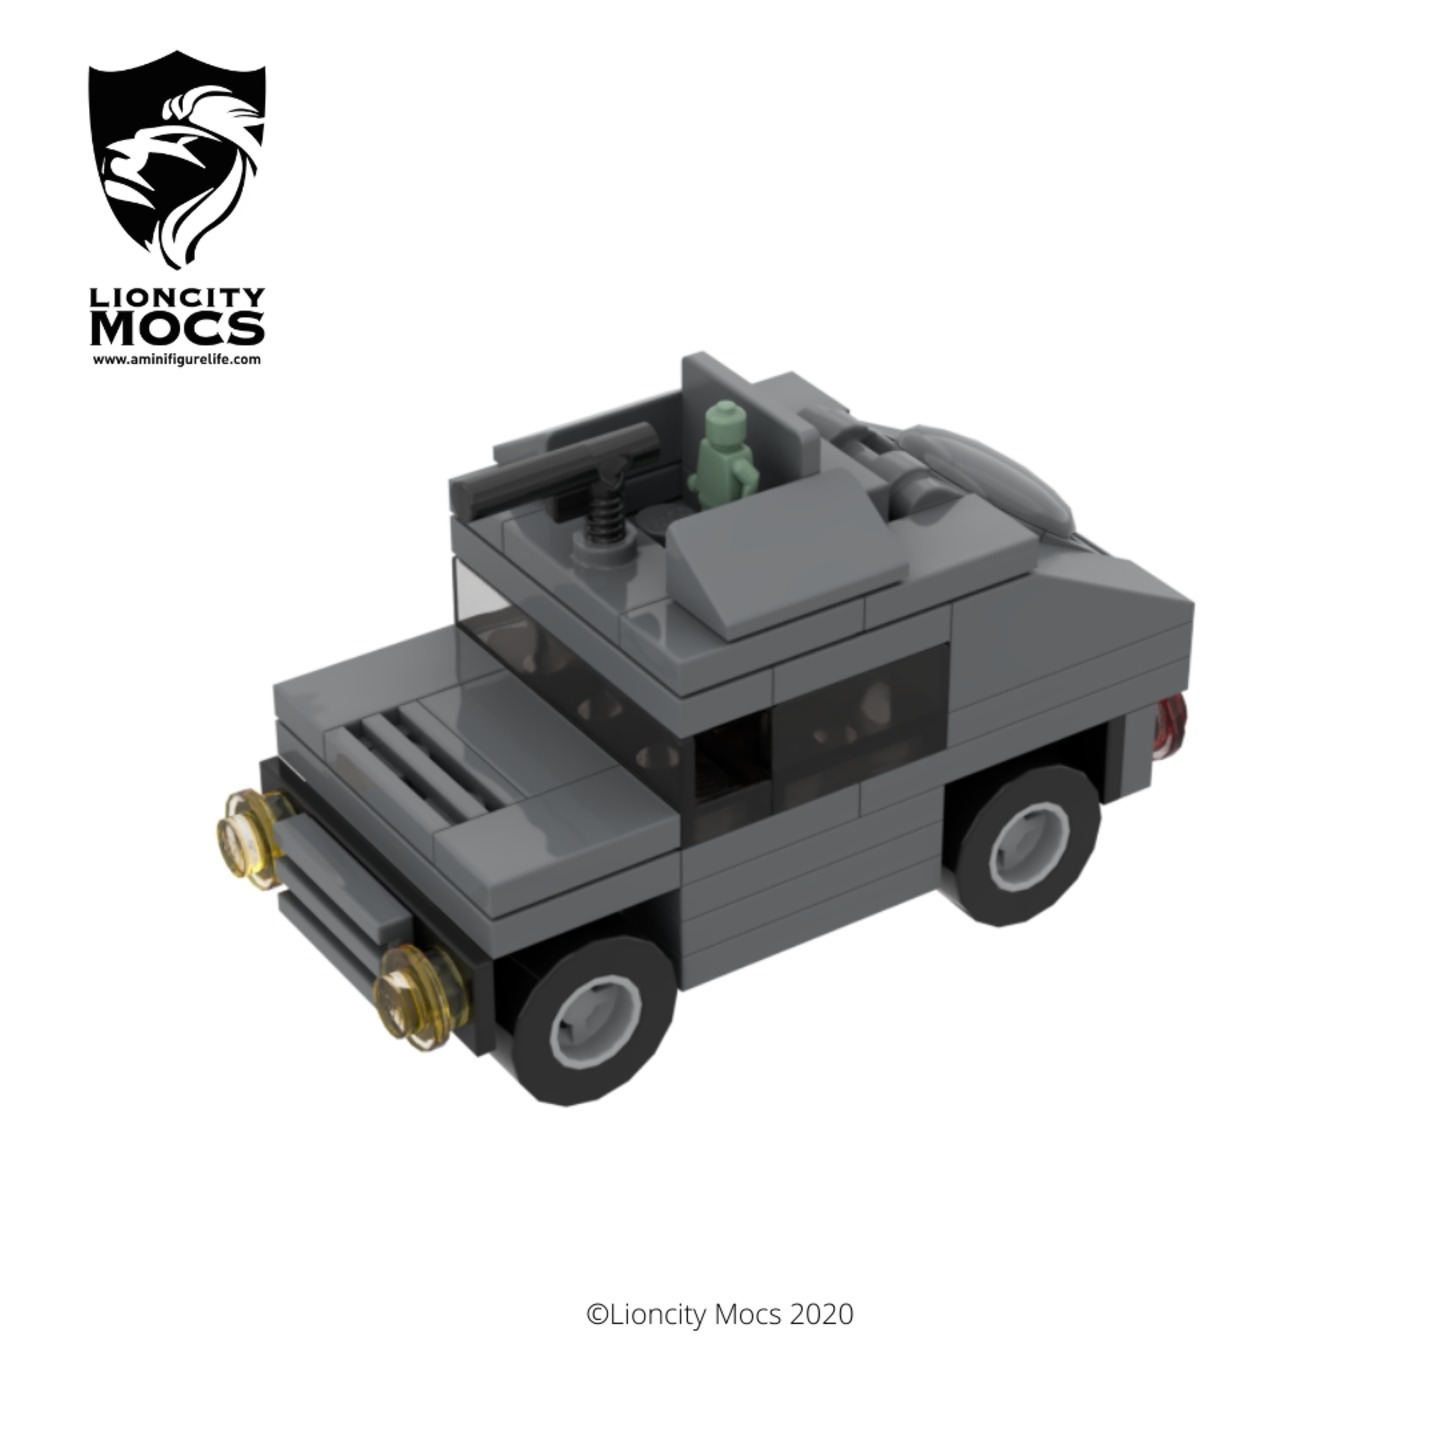  [PDF Instructions Only] Humvee(DBG) Mini Vehicle